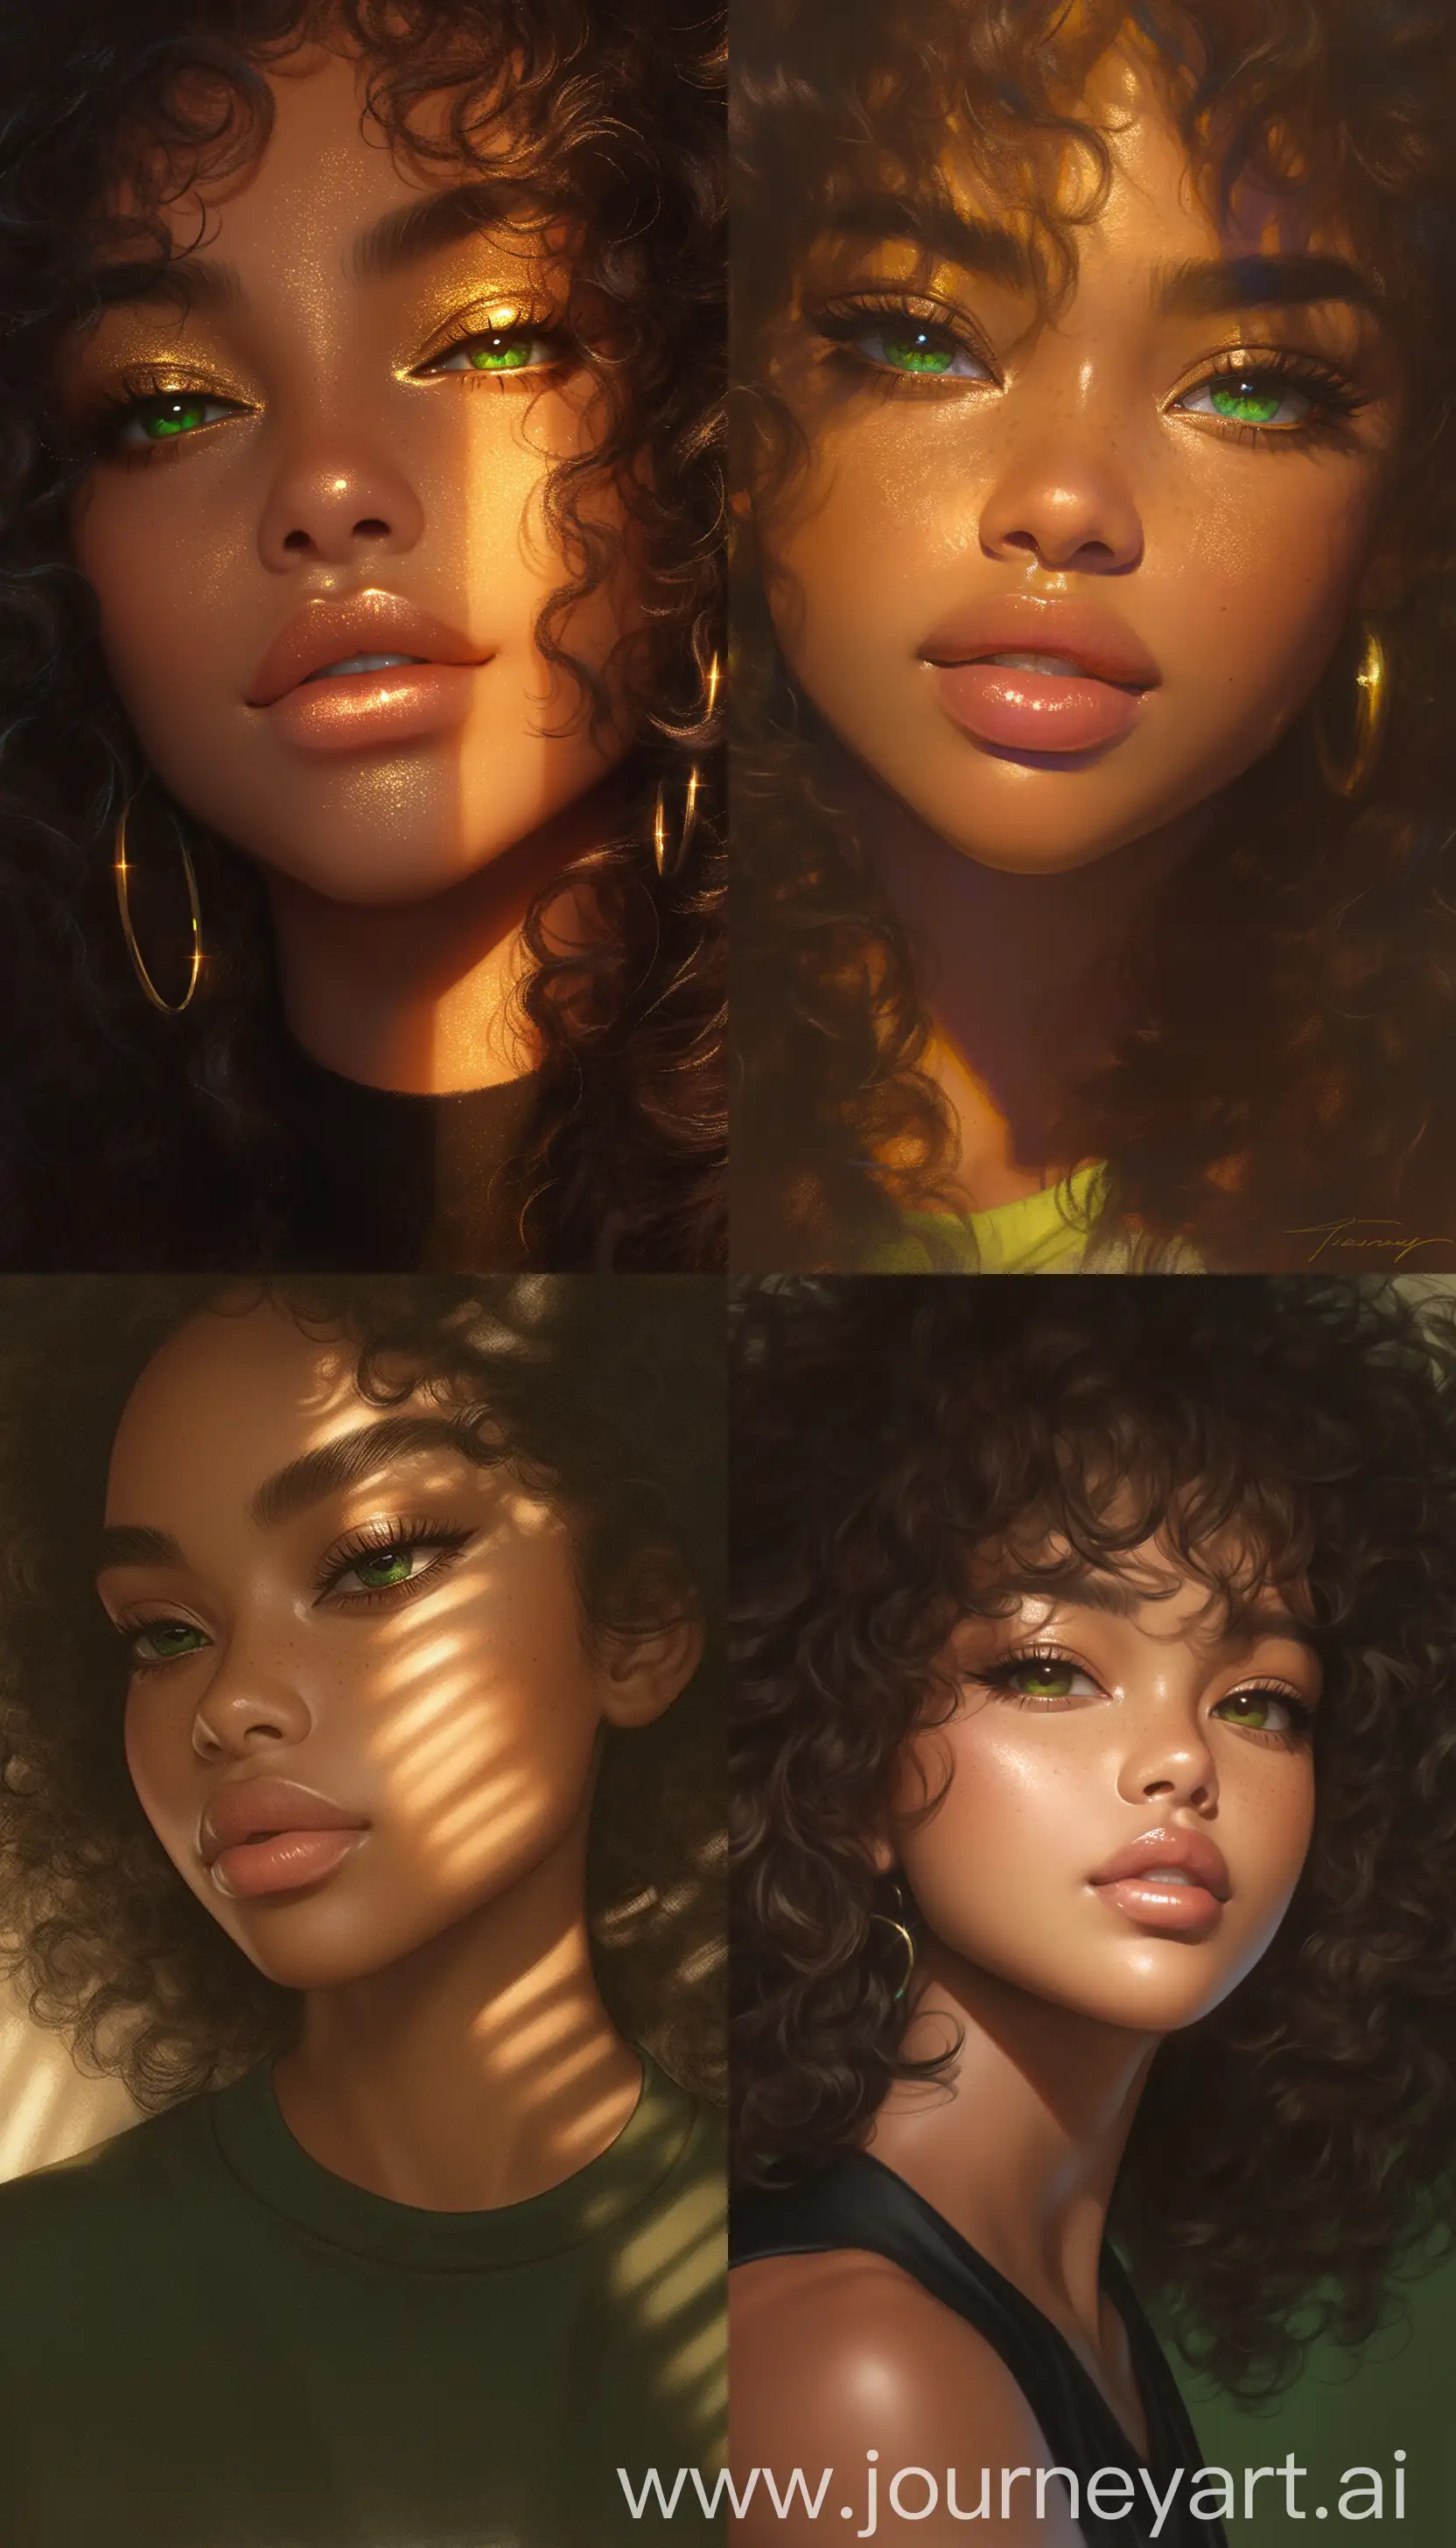 HyperRealistic-AfroAsian-Woman-Portrait-with-Green-Eyes-in-Medium-Shot